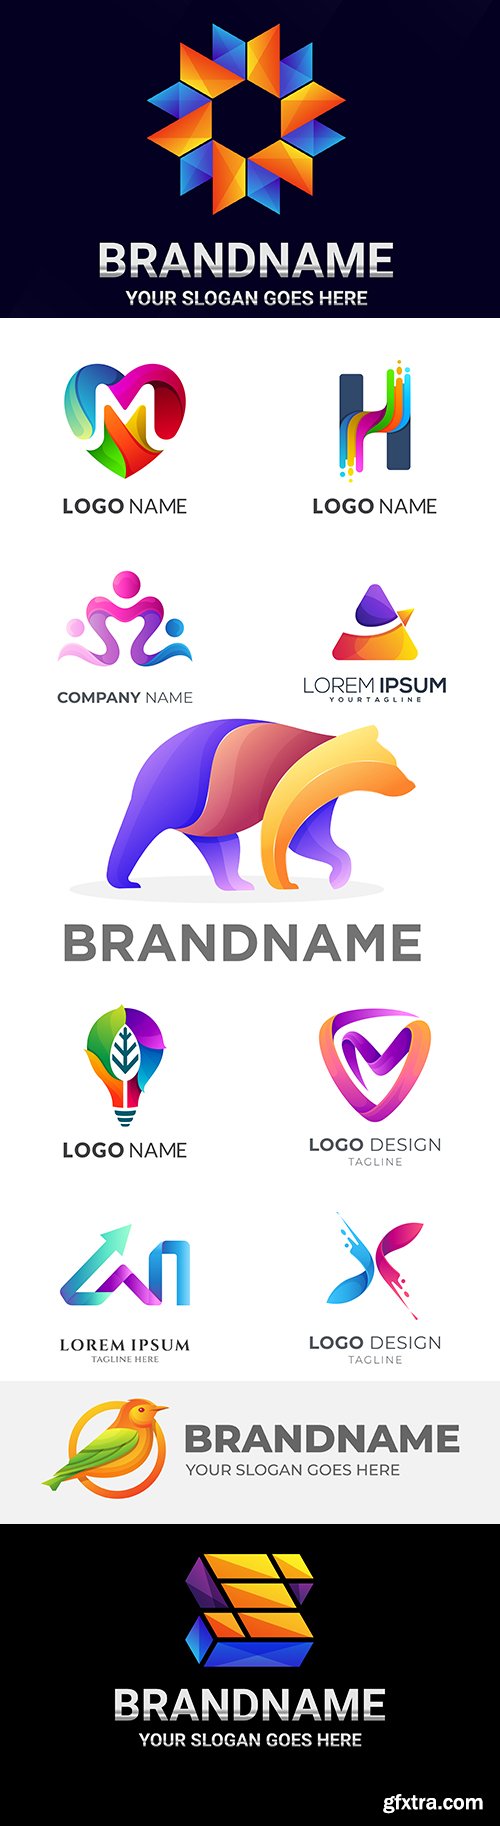 Brand name company logos business corporate design 20